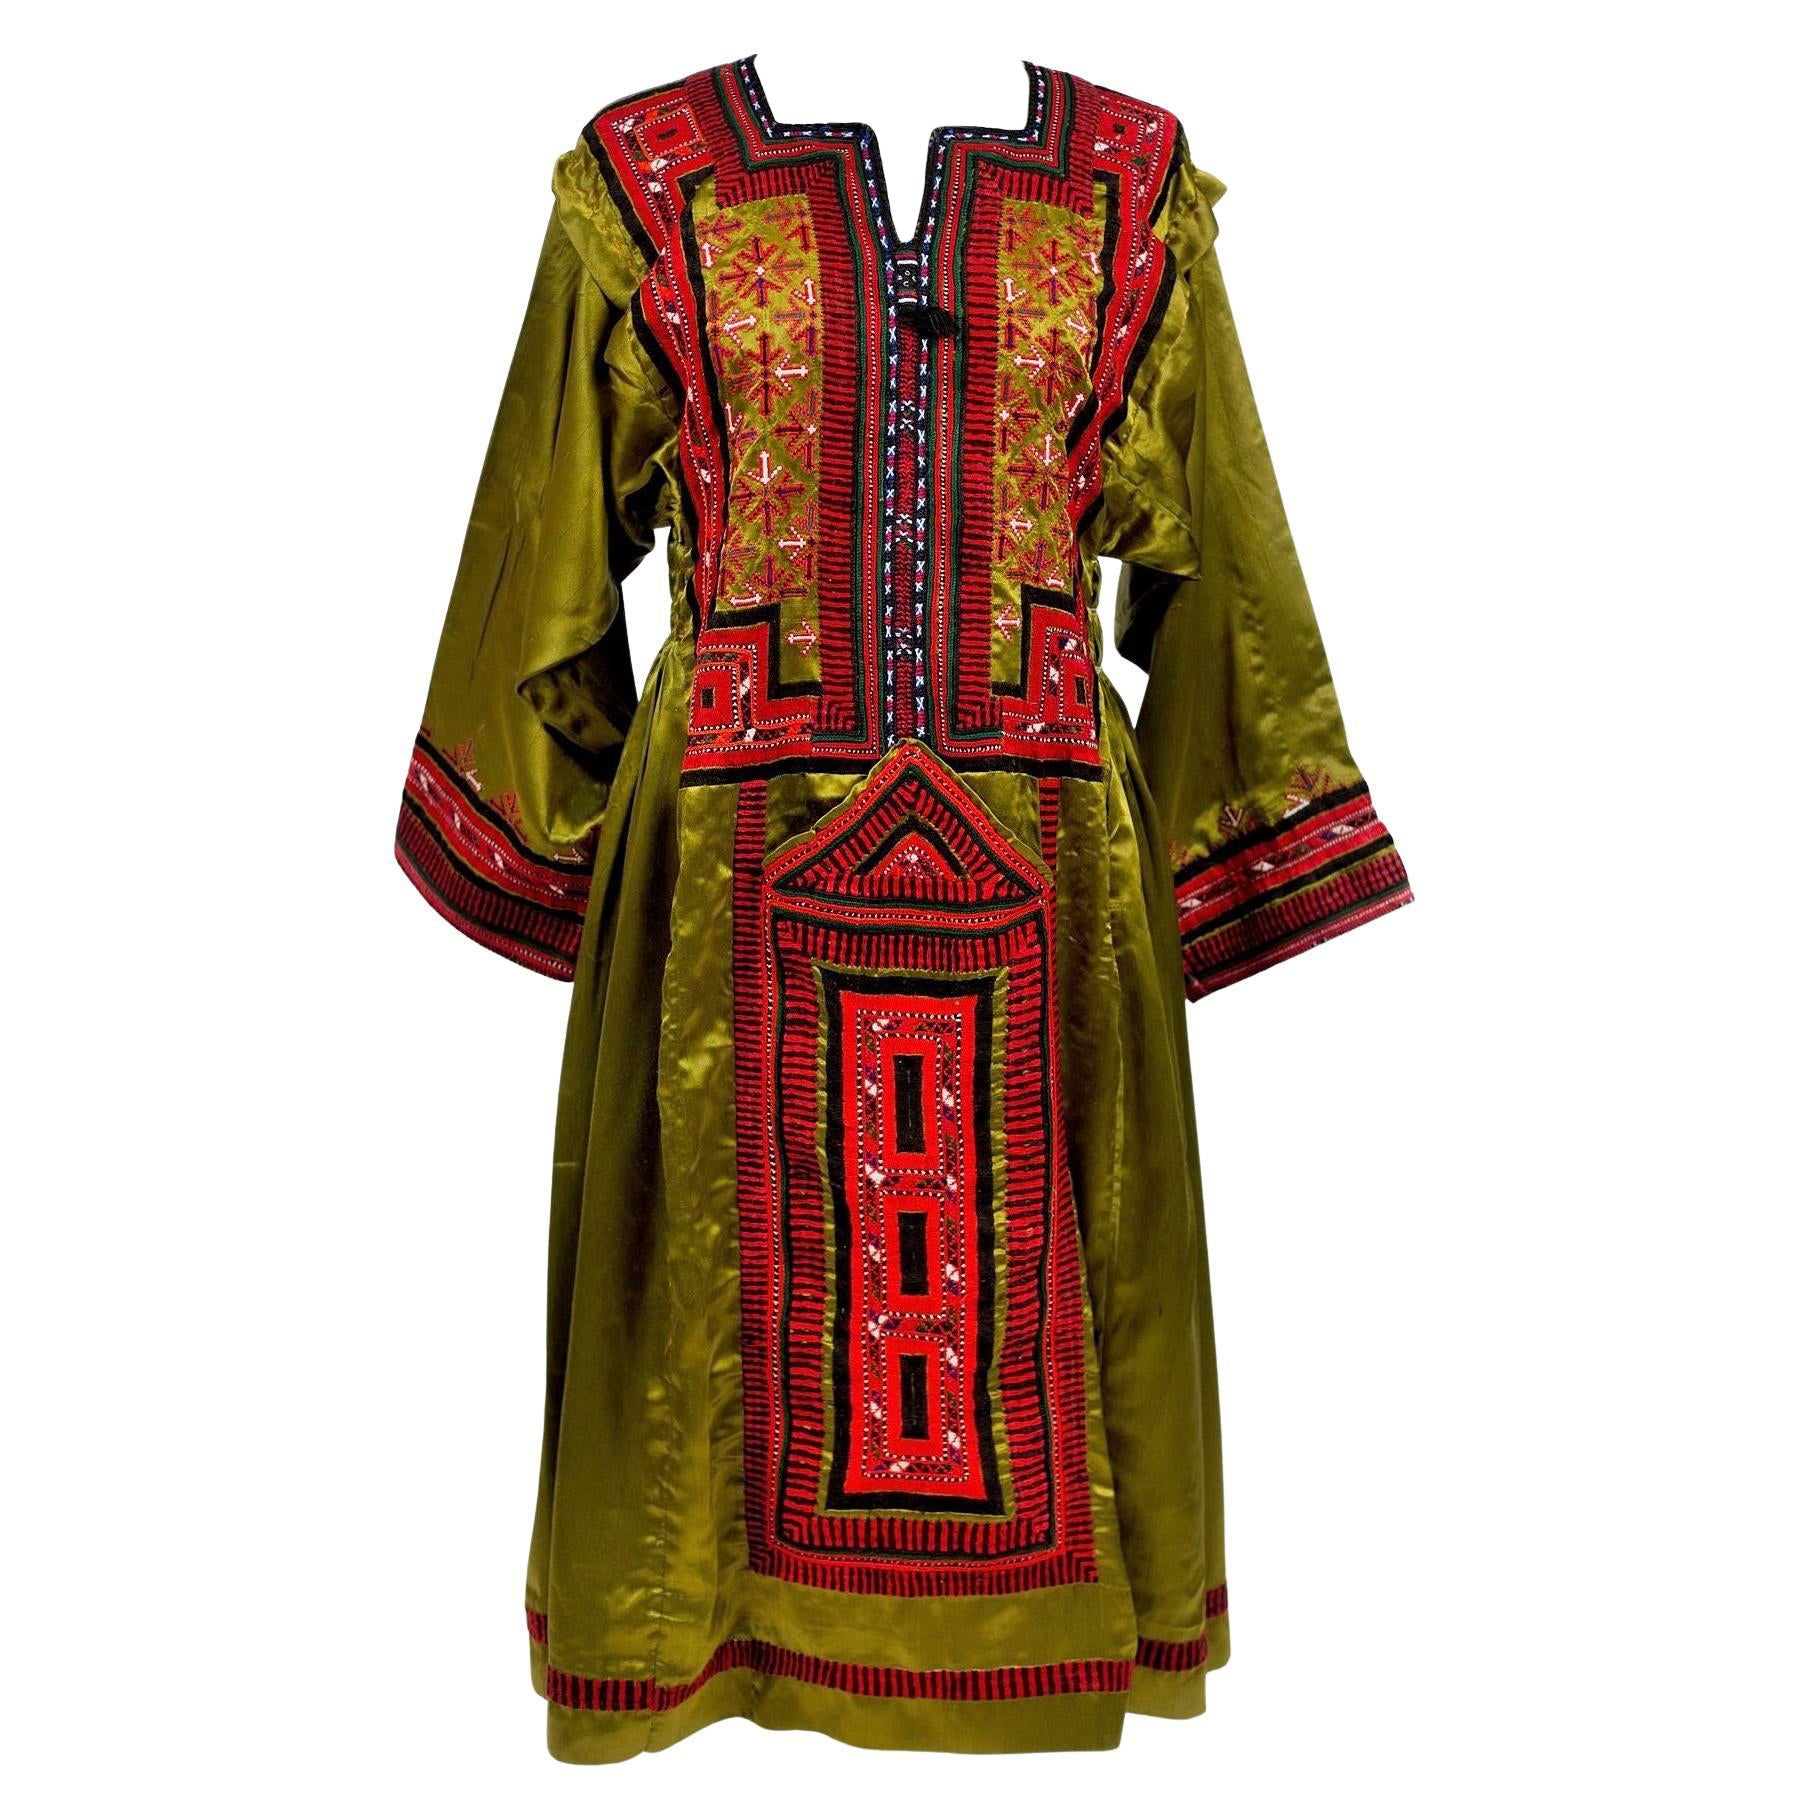 An Ethnic Bronze Satin Blouse Embroidered Dress - India Circa 1970